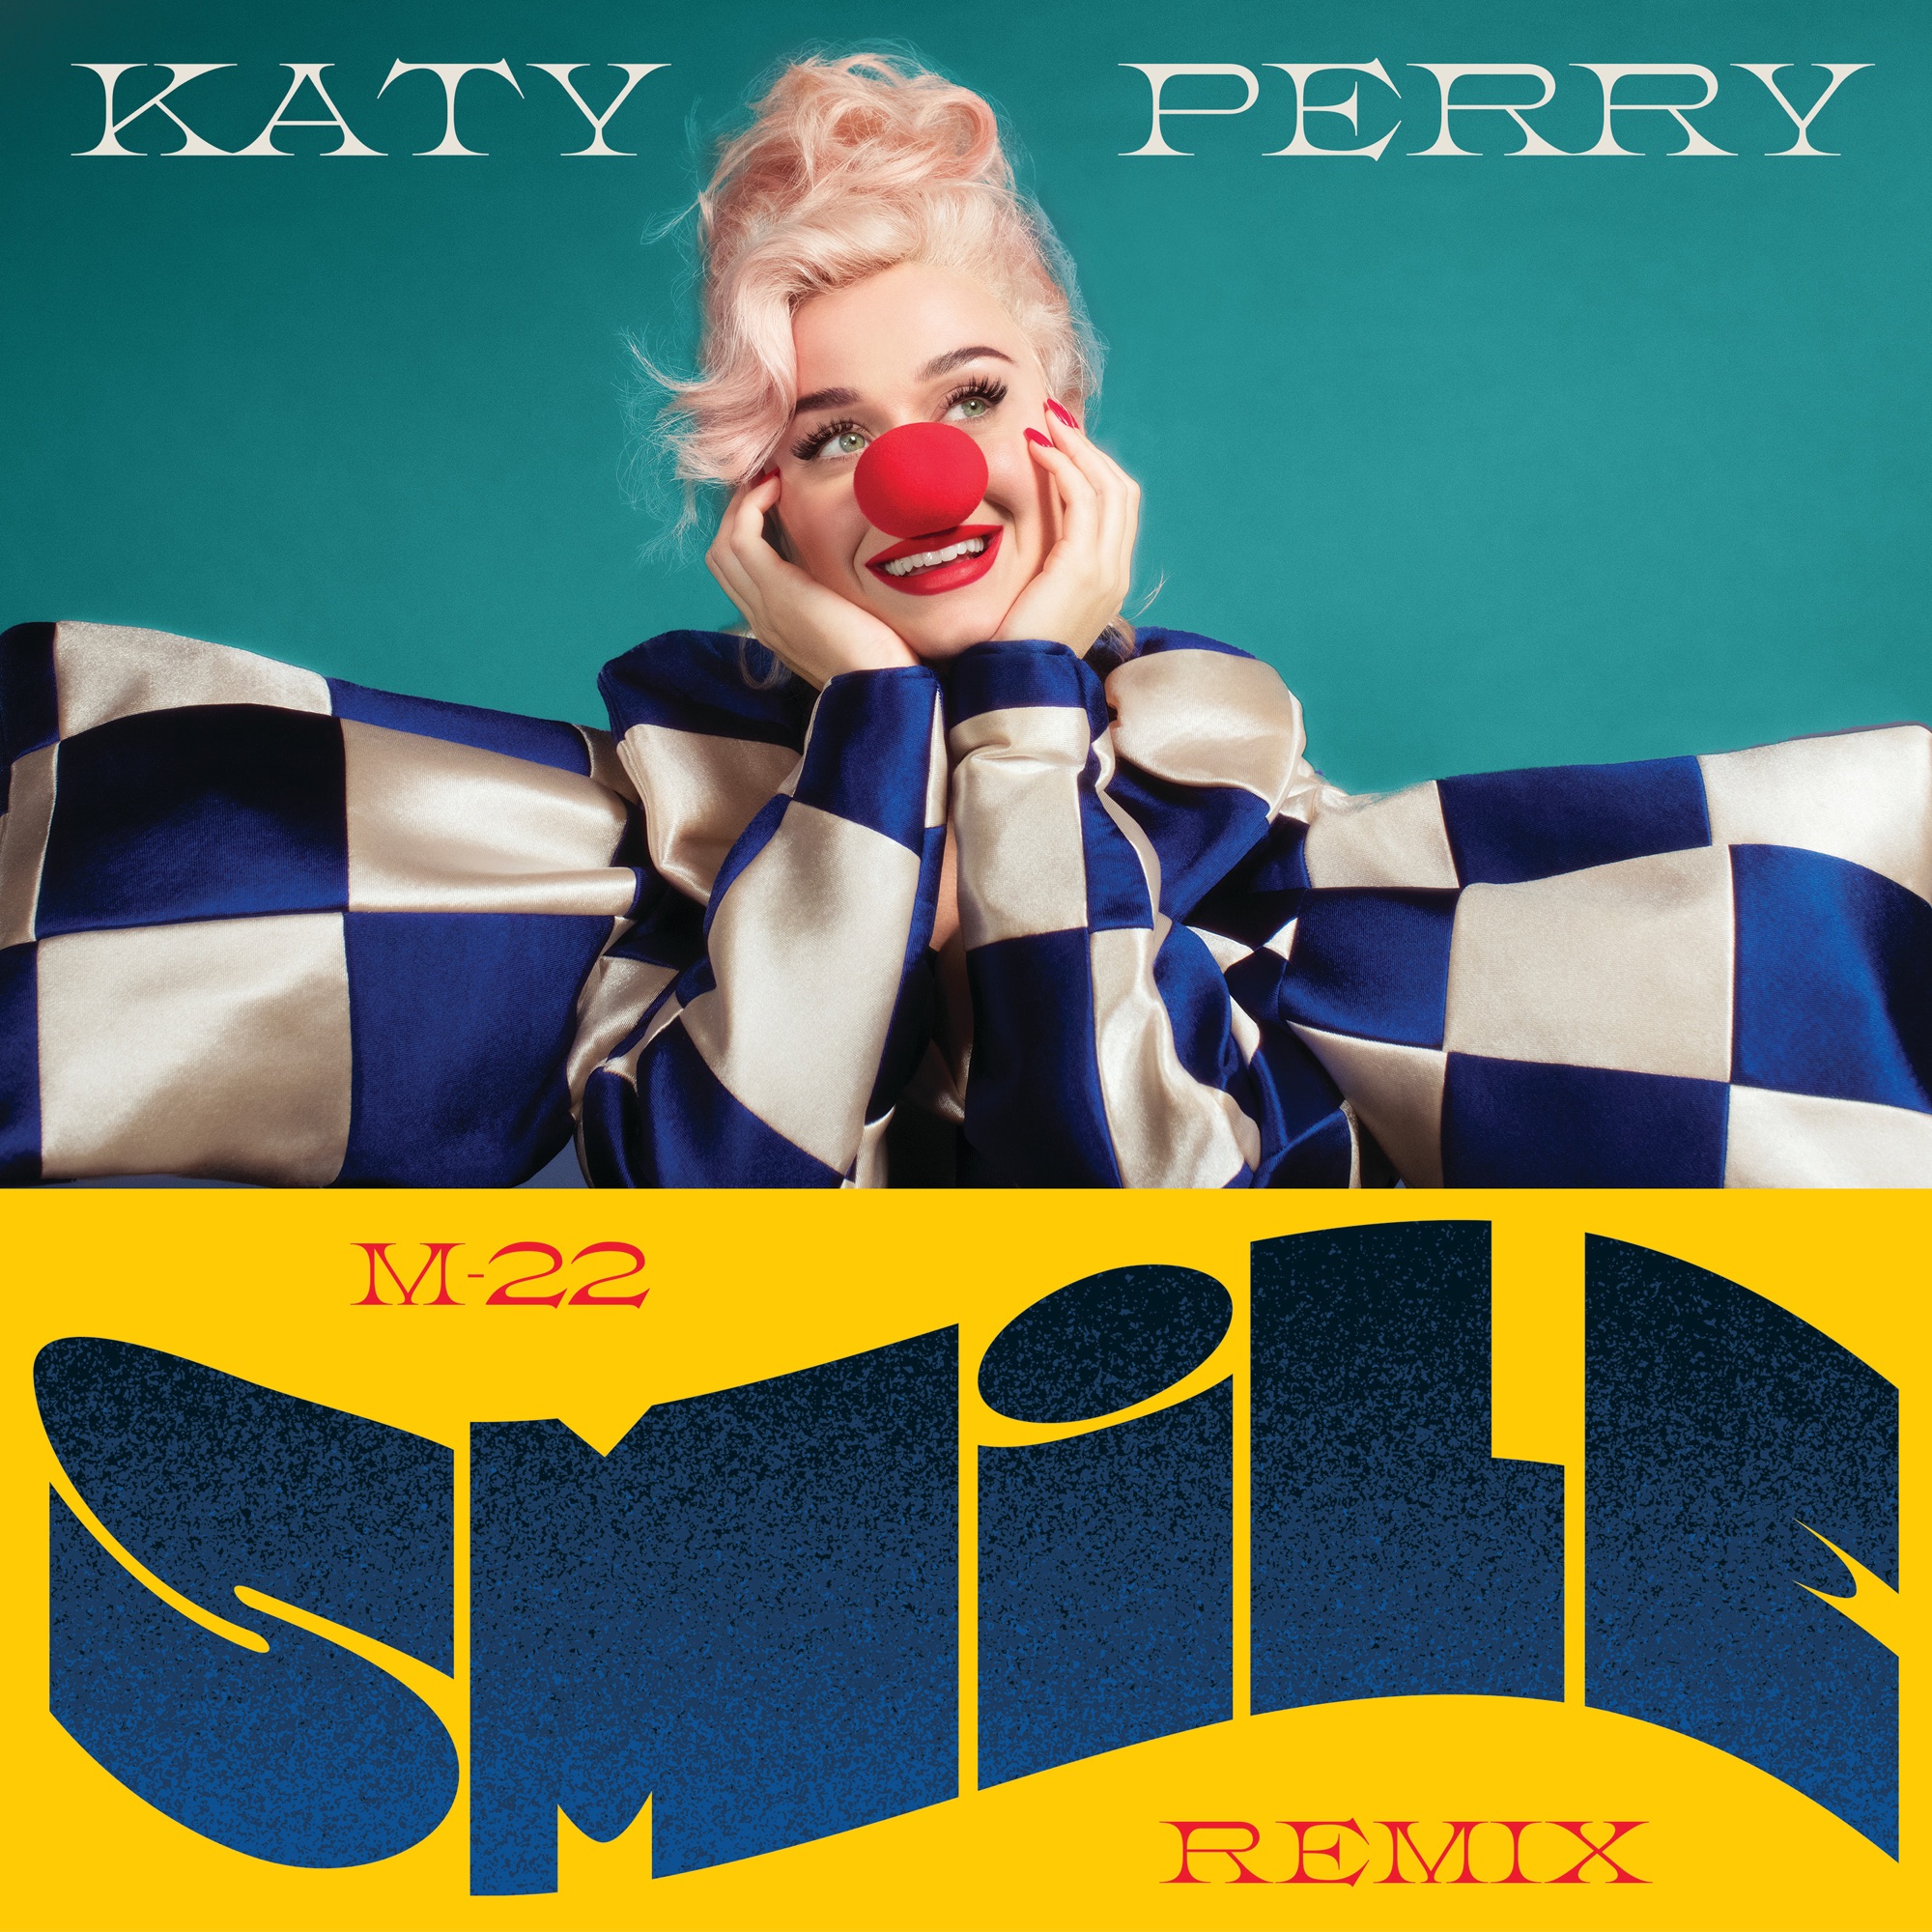 Katy Perry - Smile (M-22 Remix) - Single